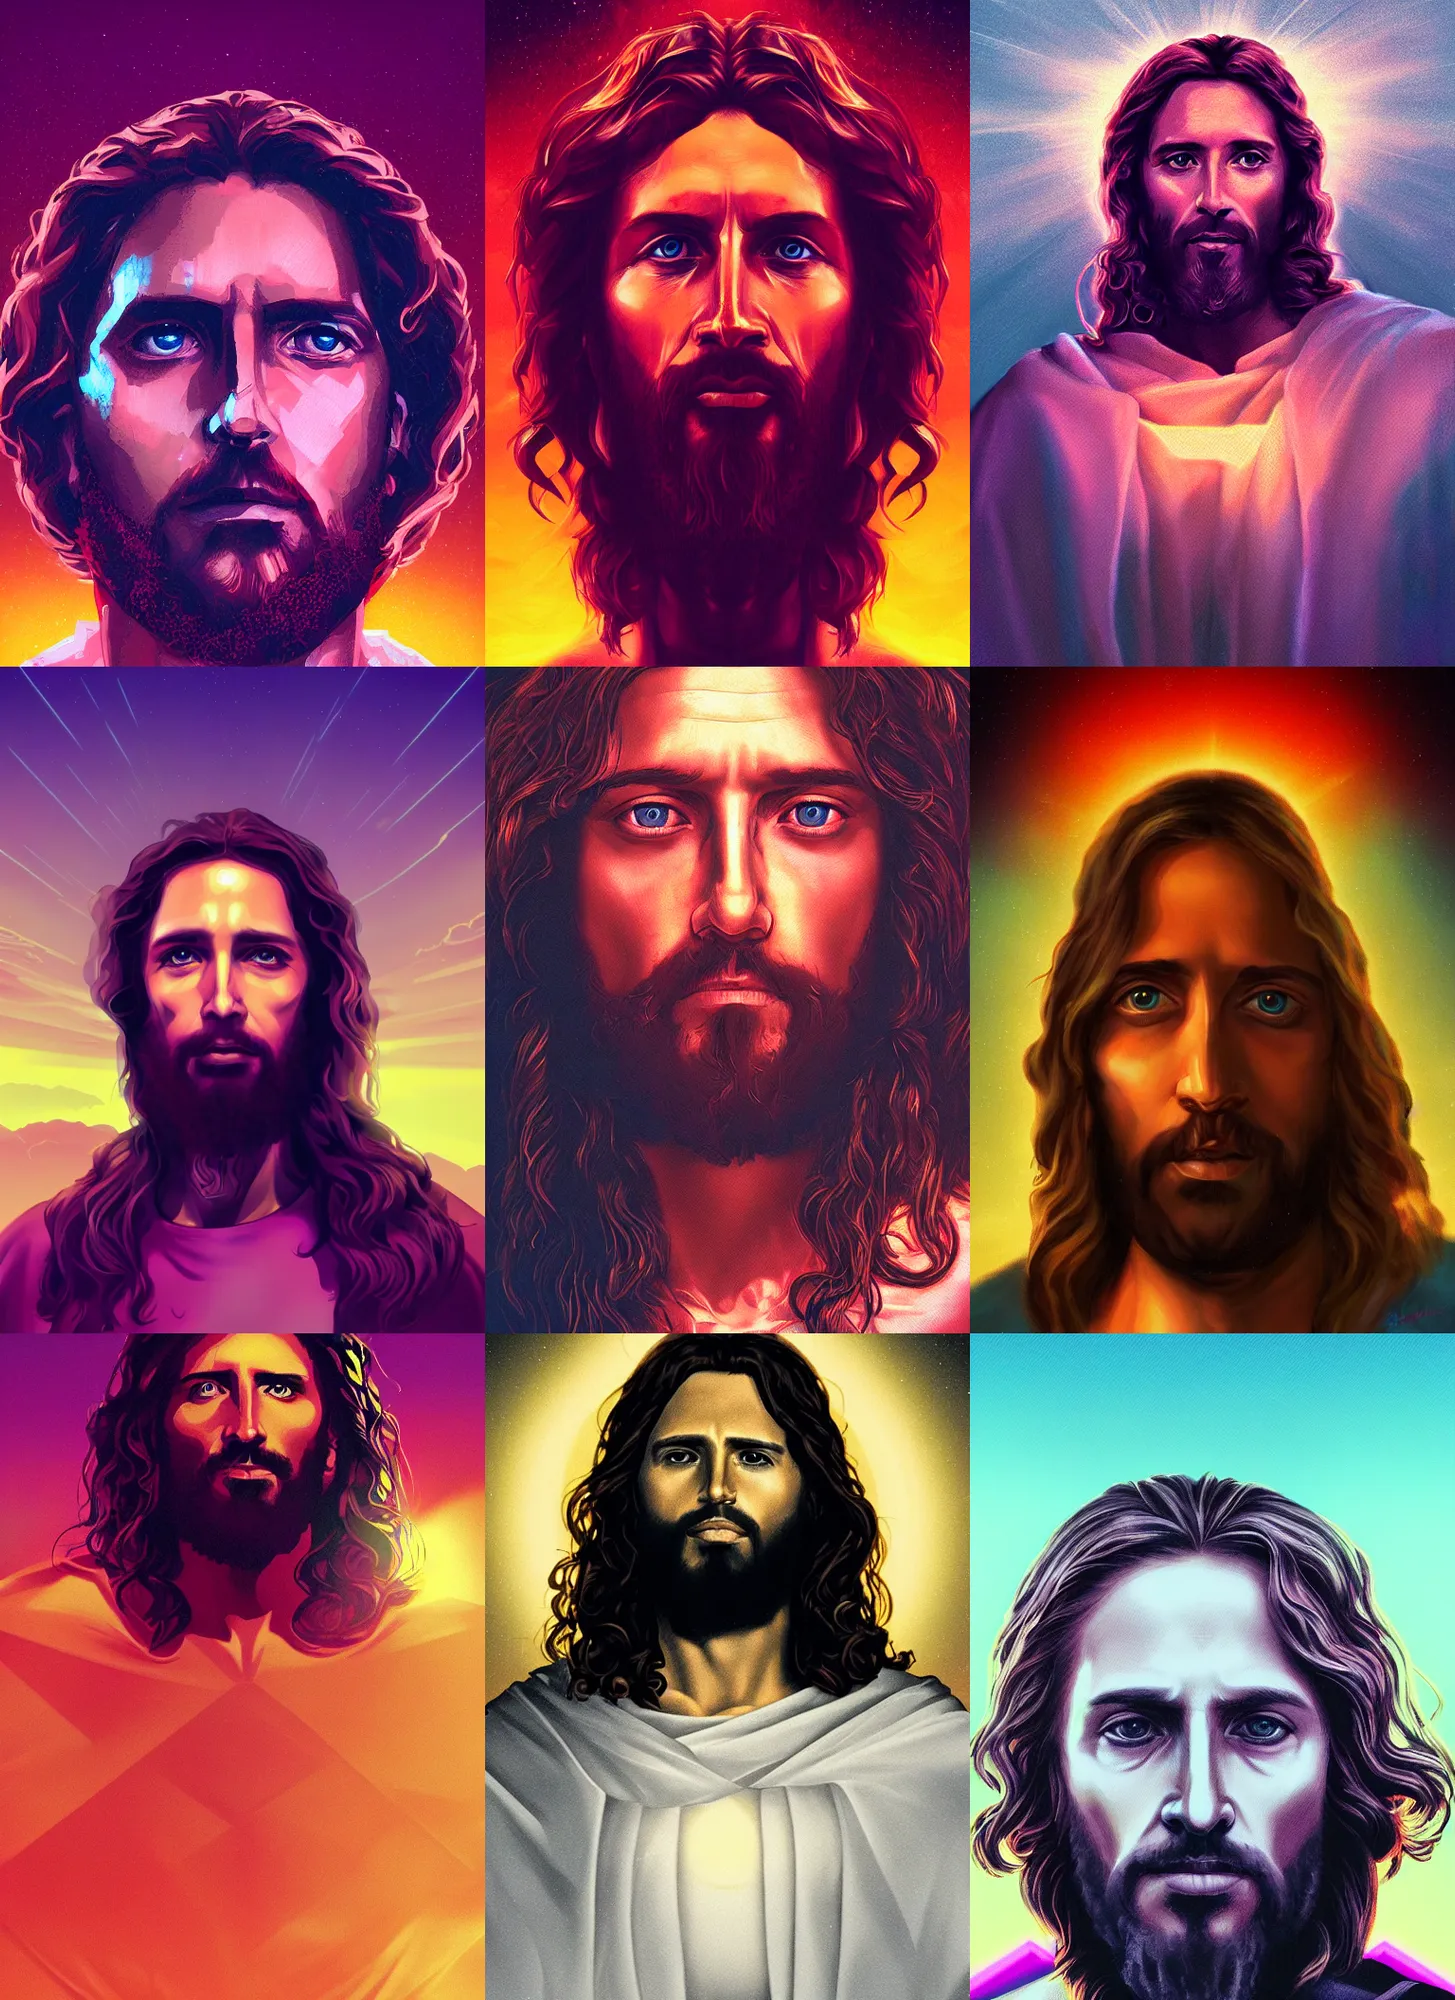 Prompt: portrait of jesus christ, synthwave, futuristic, artstation, high quality